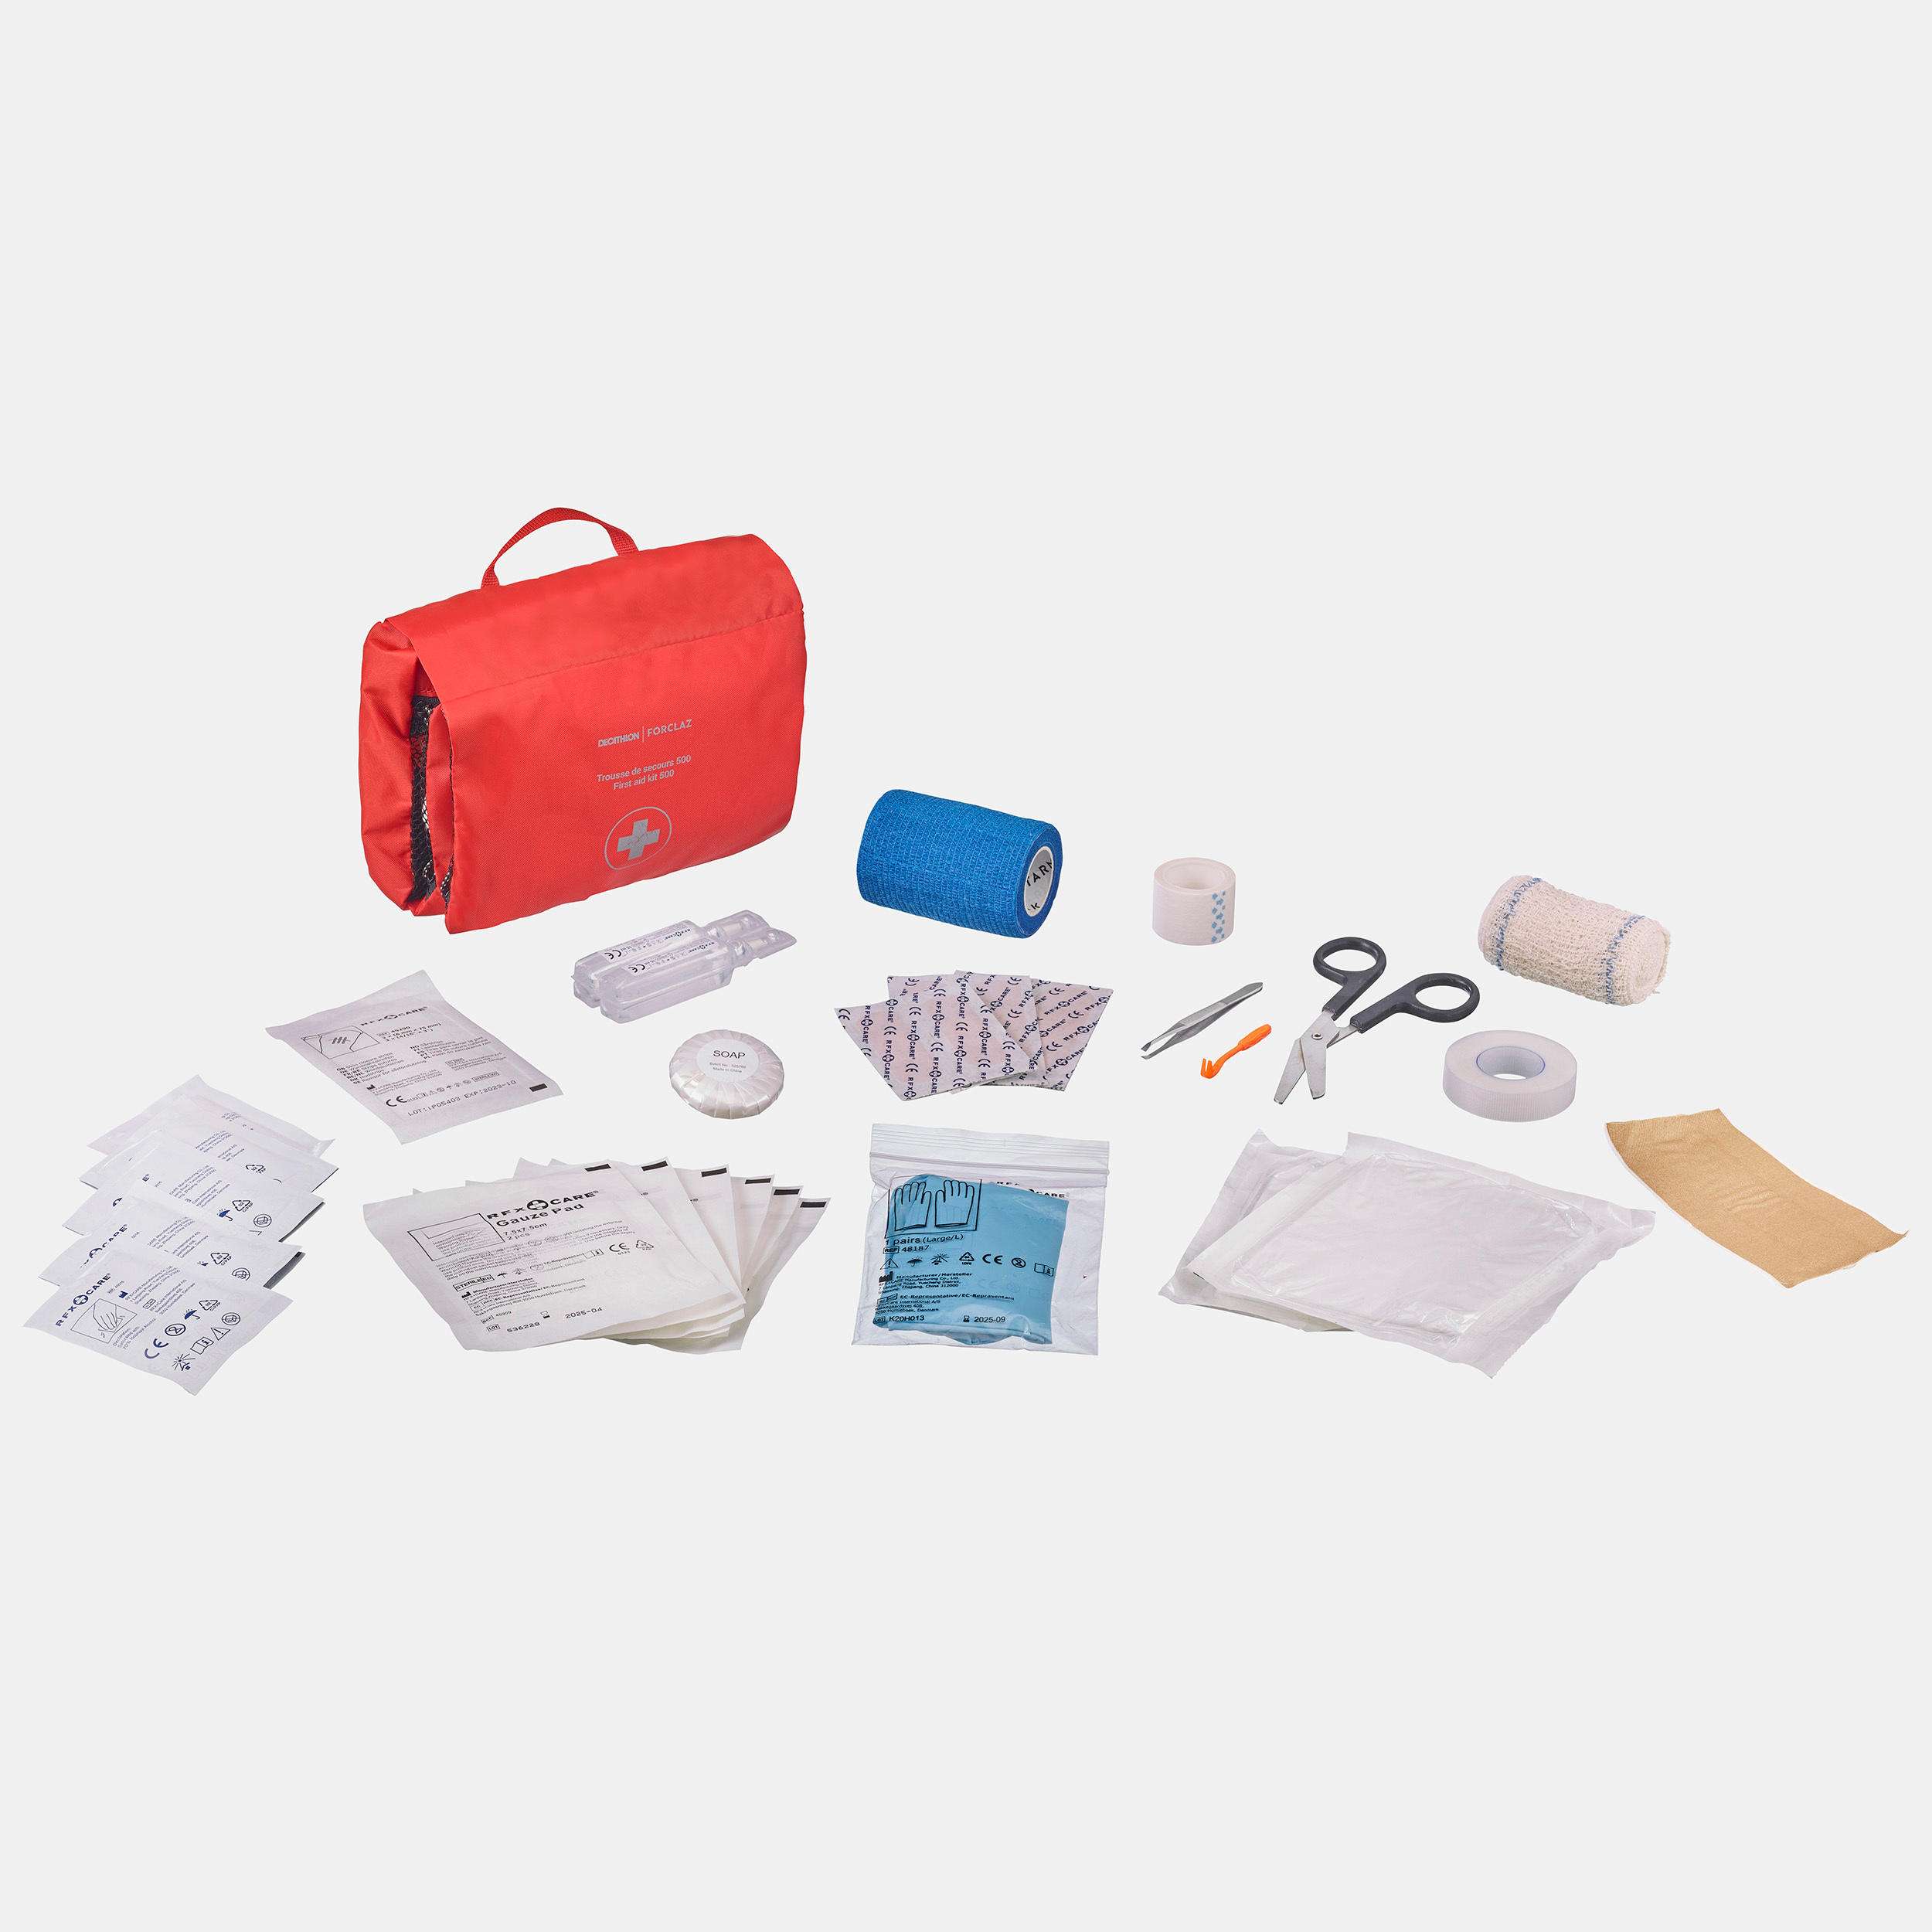 Hiking 47-Piece First Aid Kit - 500 - FORCLAZ